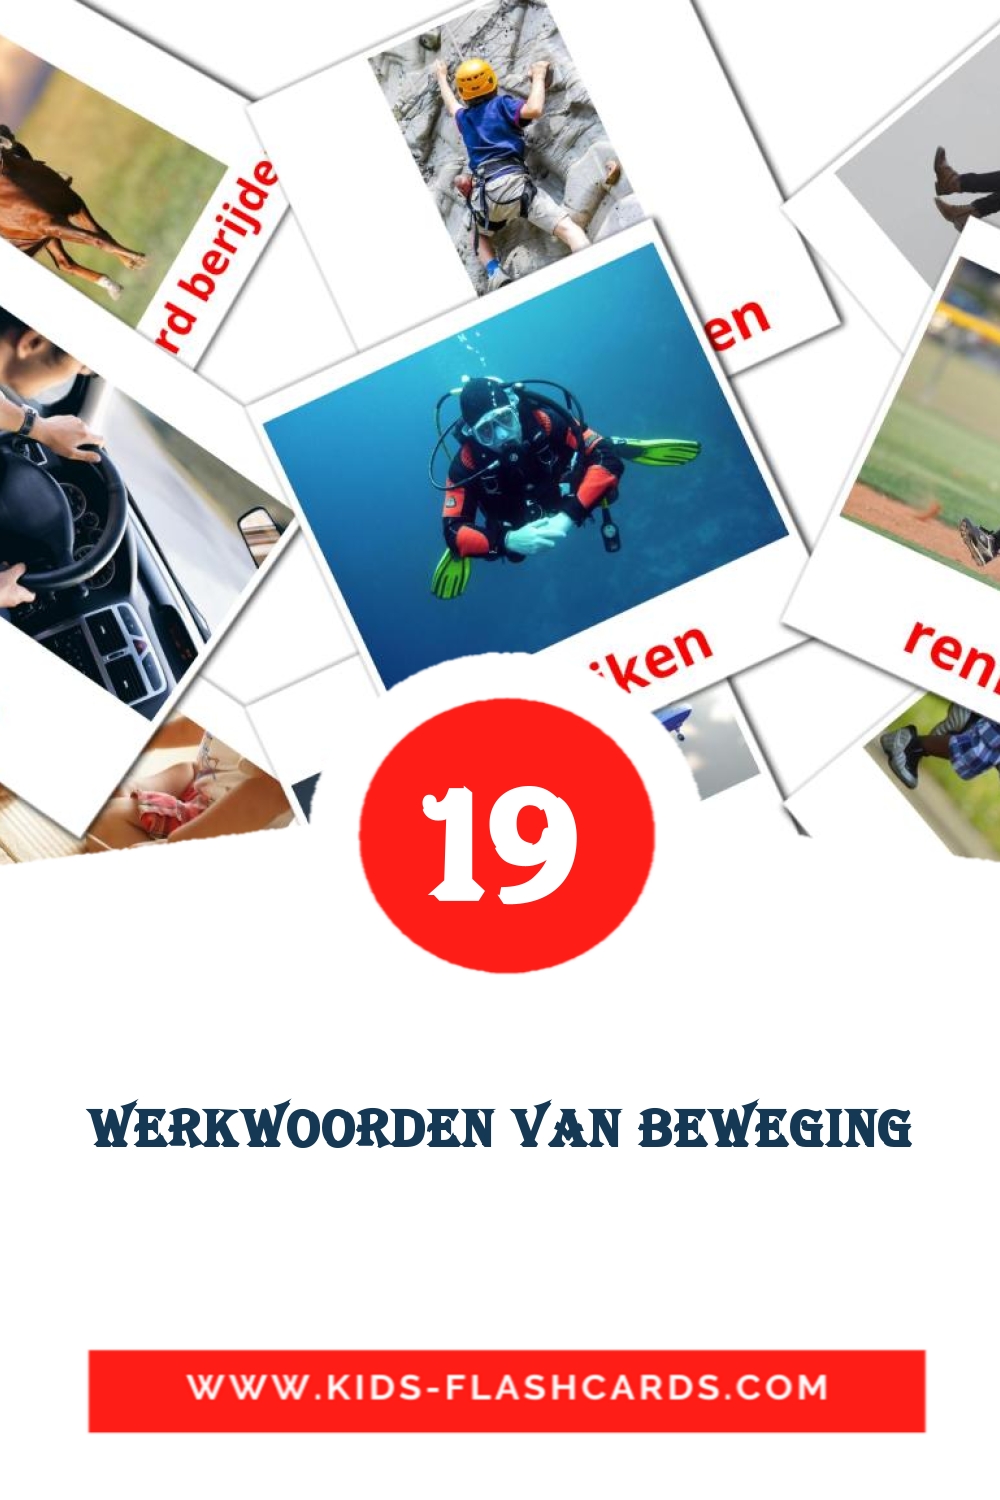 19 tarjetas didacticas de Werkwoorden van beweging para el jardín de infancia en holandés